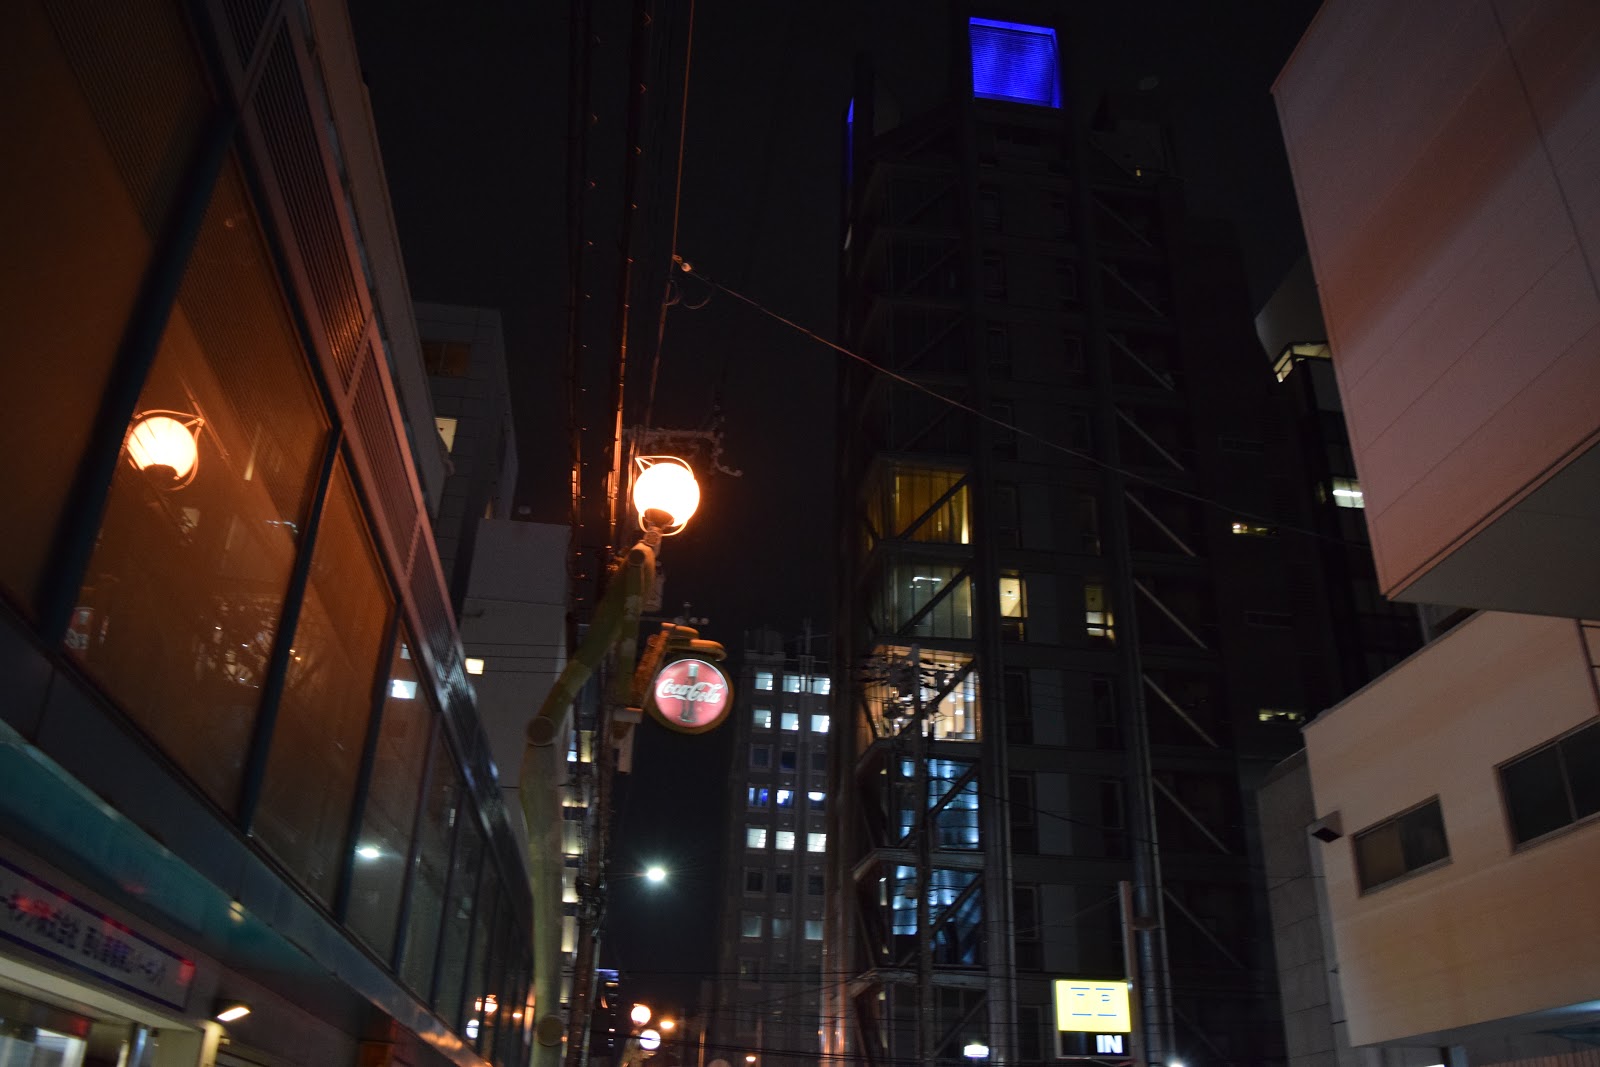 Ameura street lighting at night